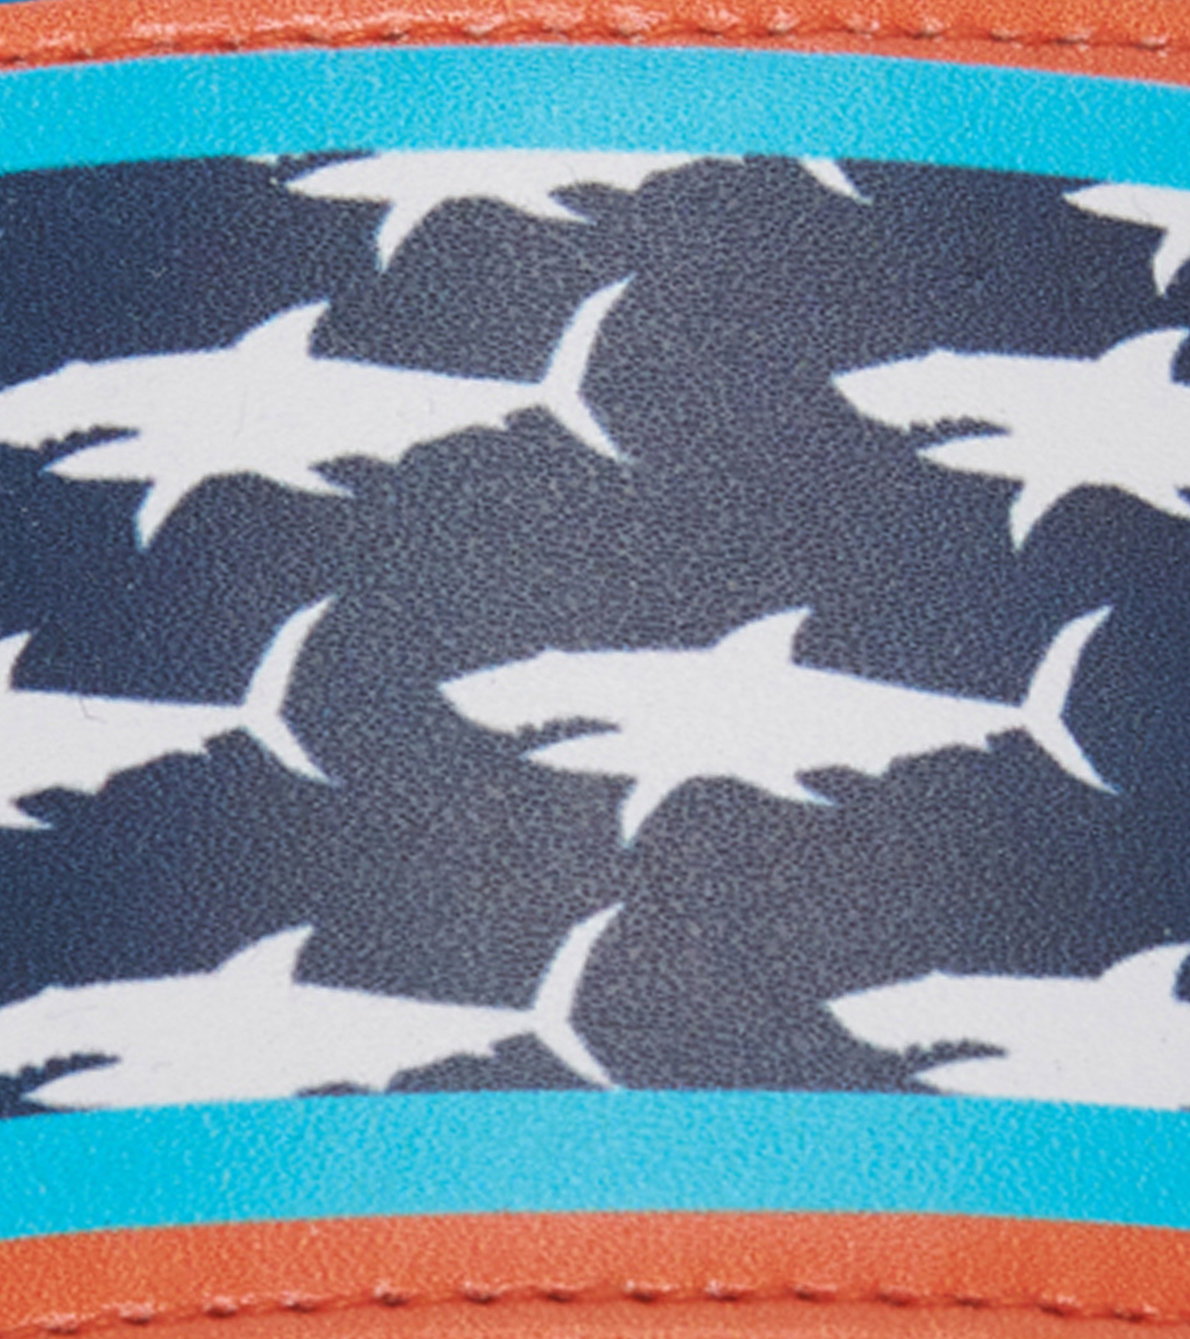 View larger image of Boys Printed Sharks Slides